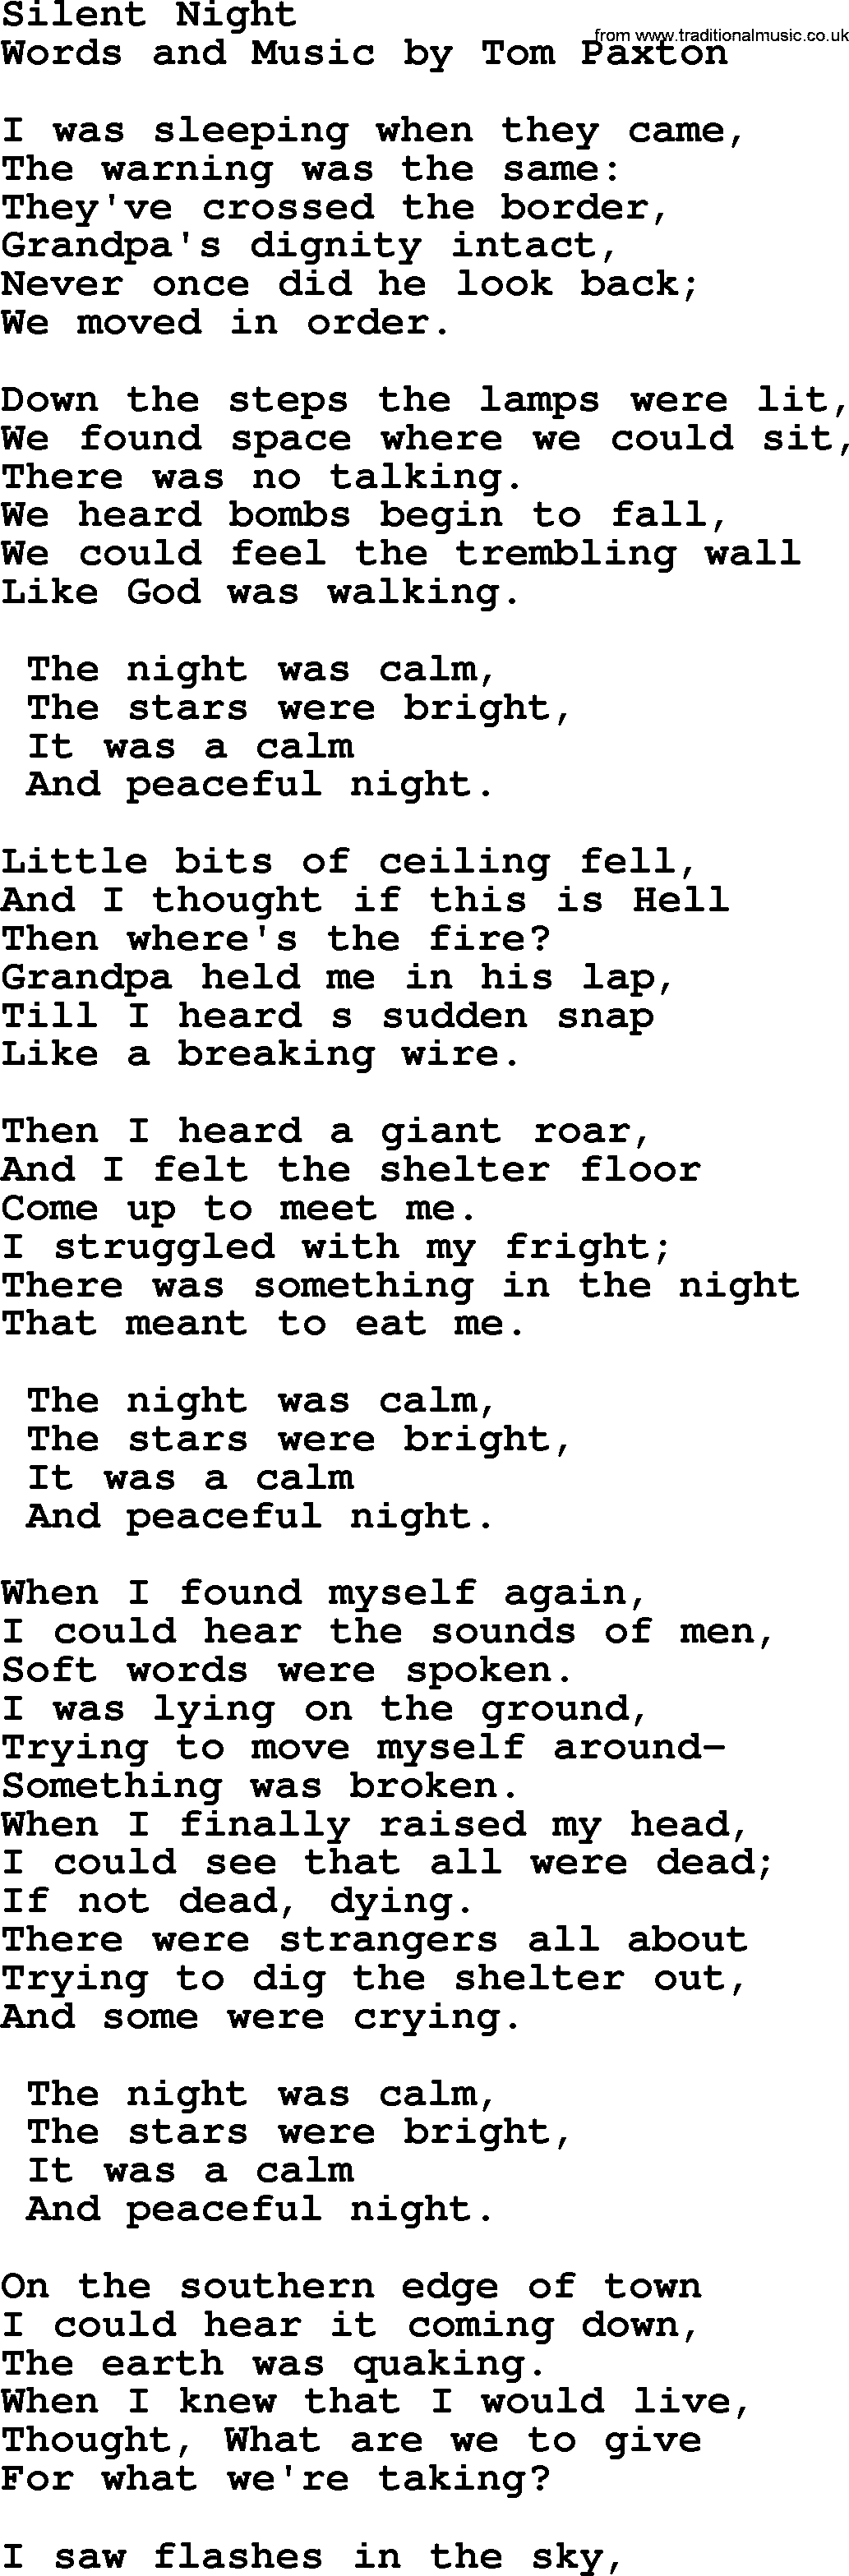 Tom Paxton song: Silent Night, lyrics